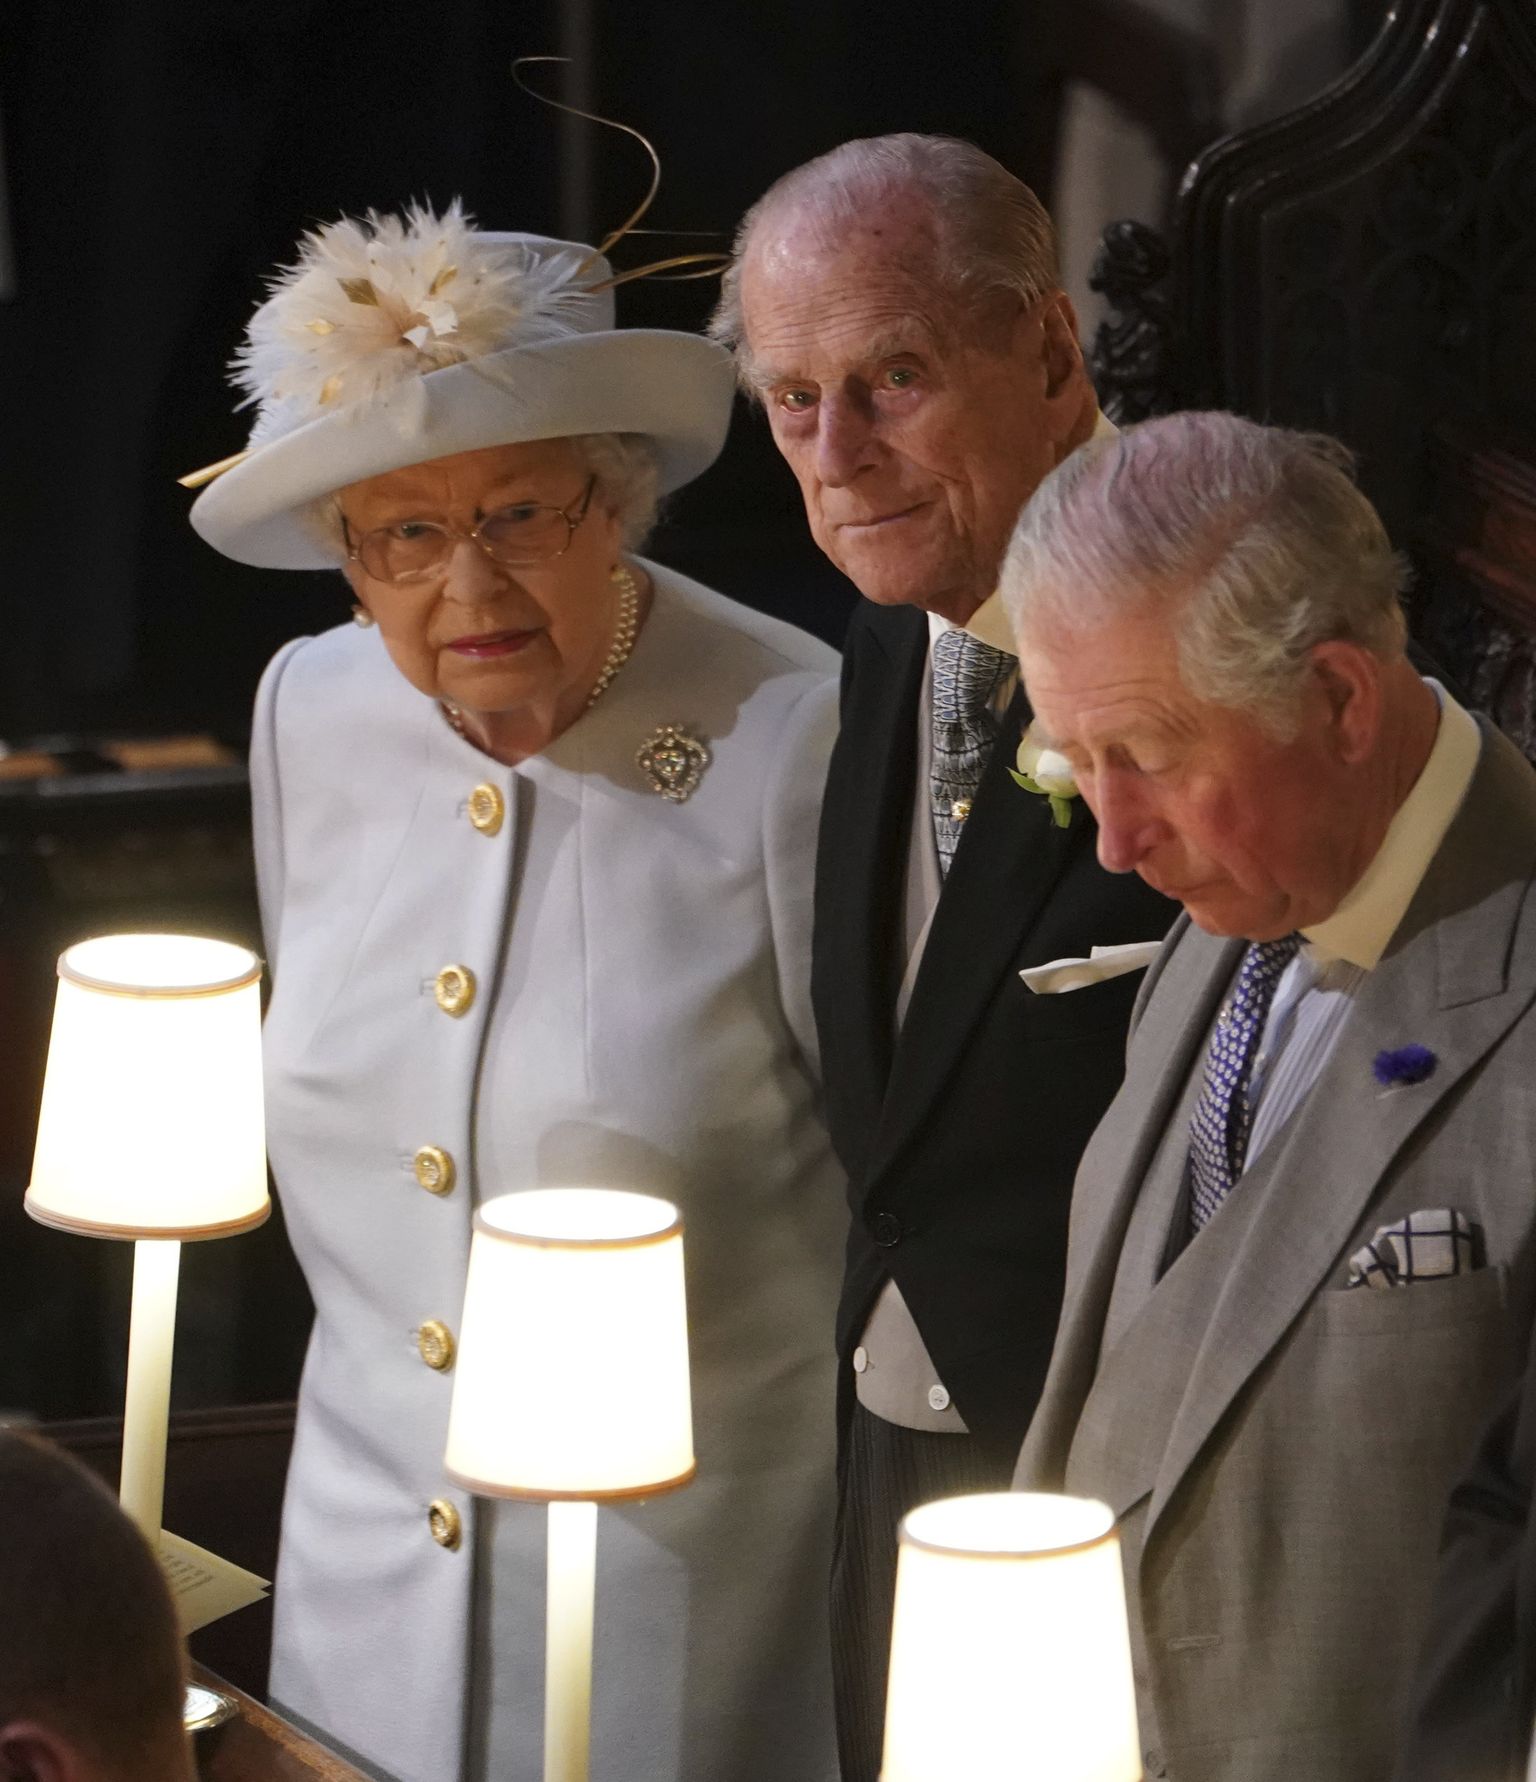 Briti kuninganna Elizabeth II, prints Philip ning prints Charles